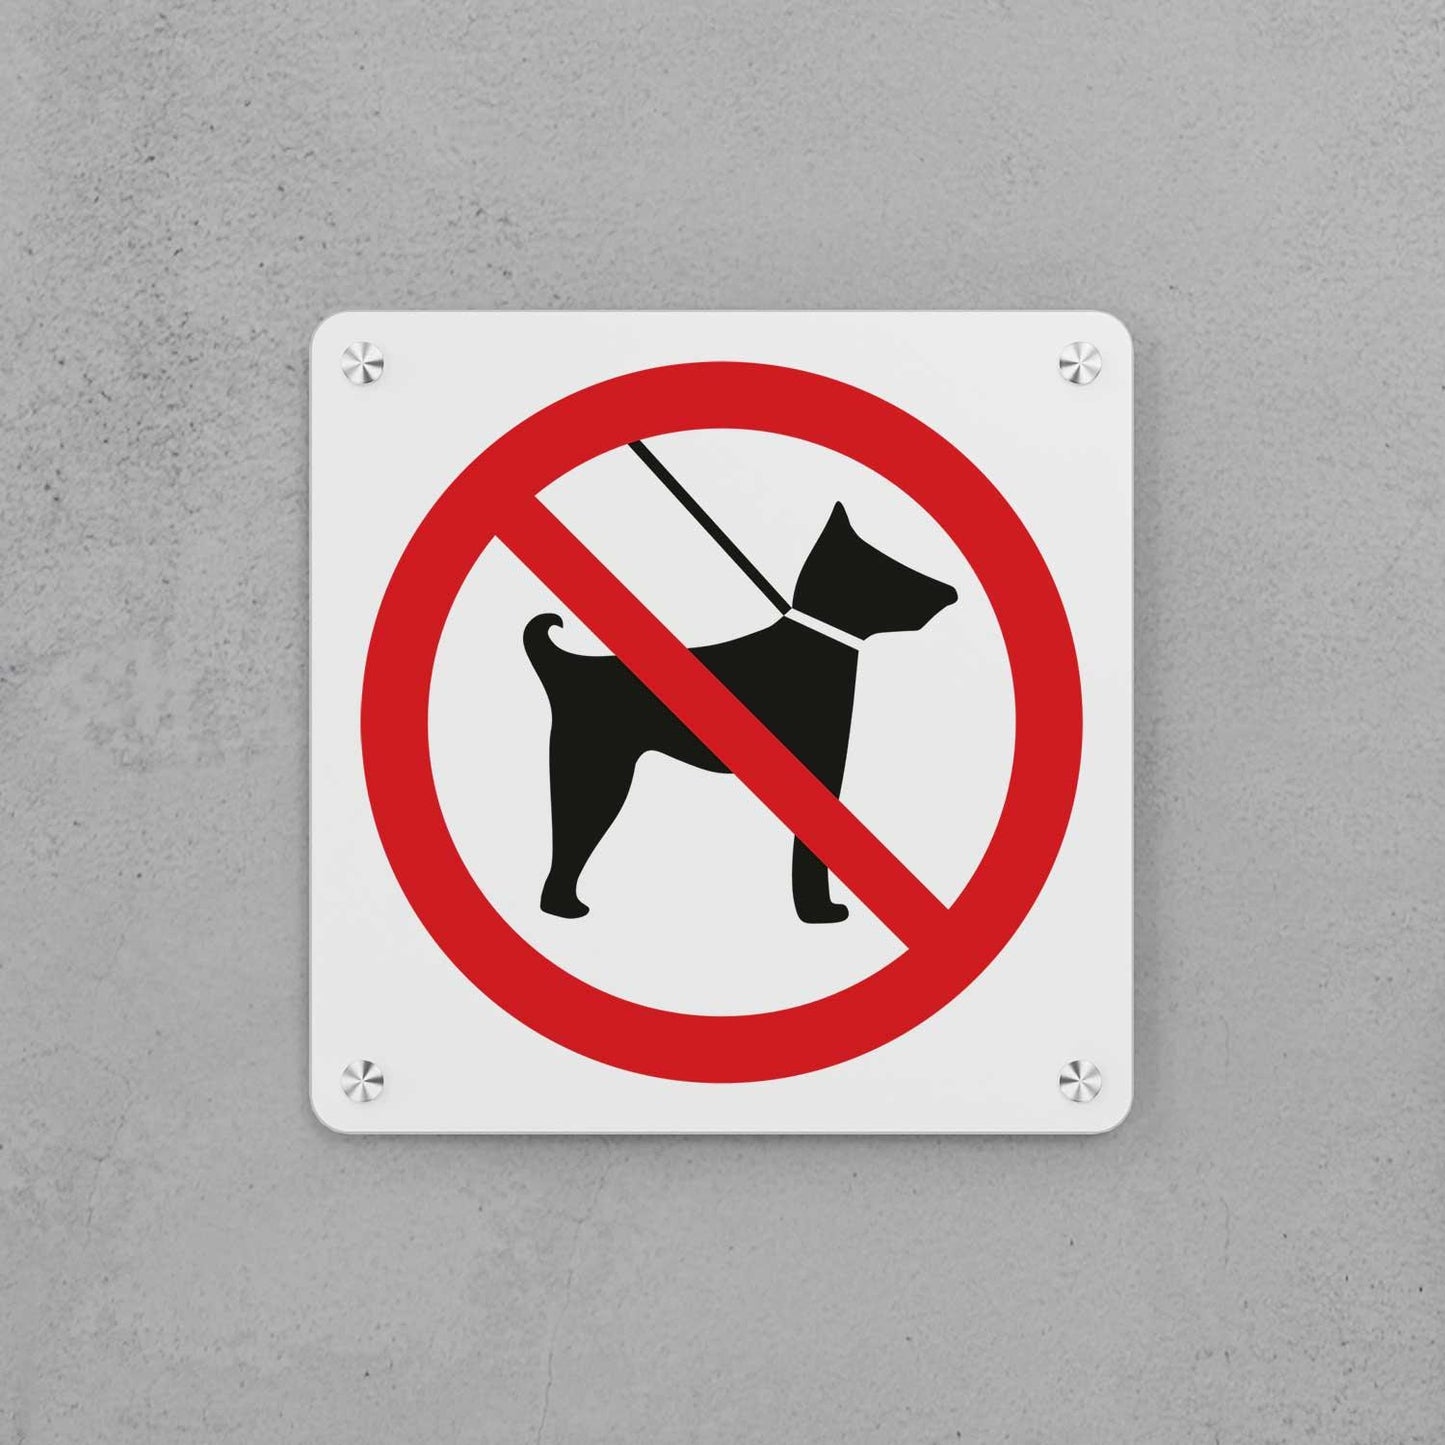 No Pets Allowed Sign - Housenama